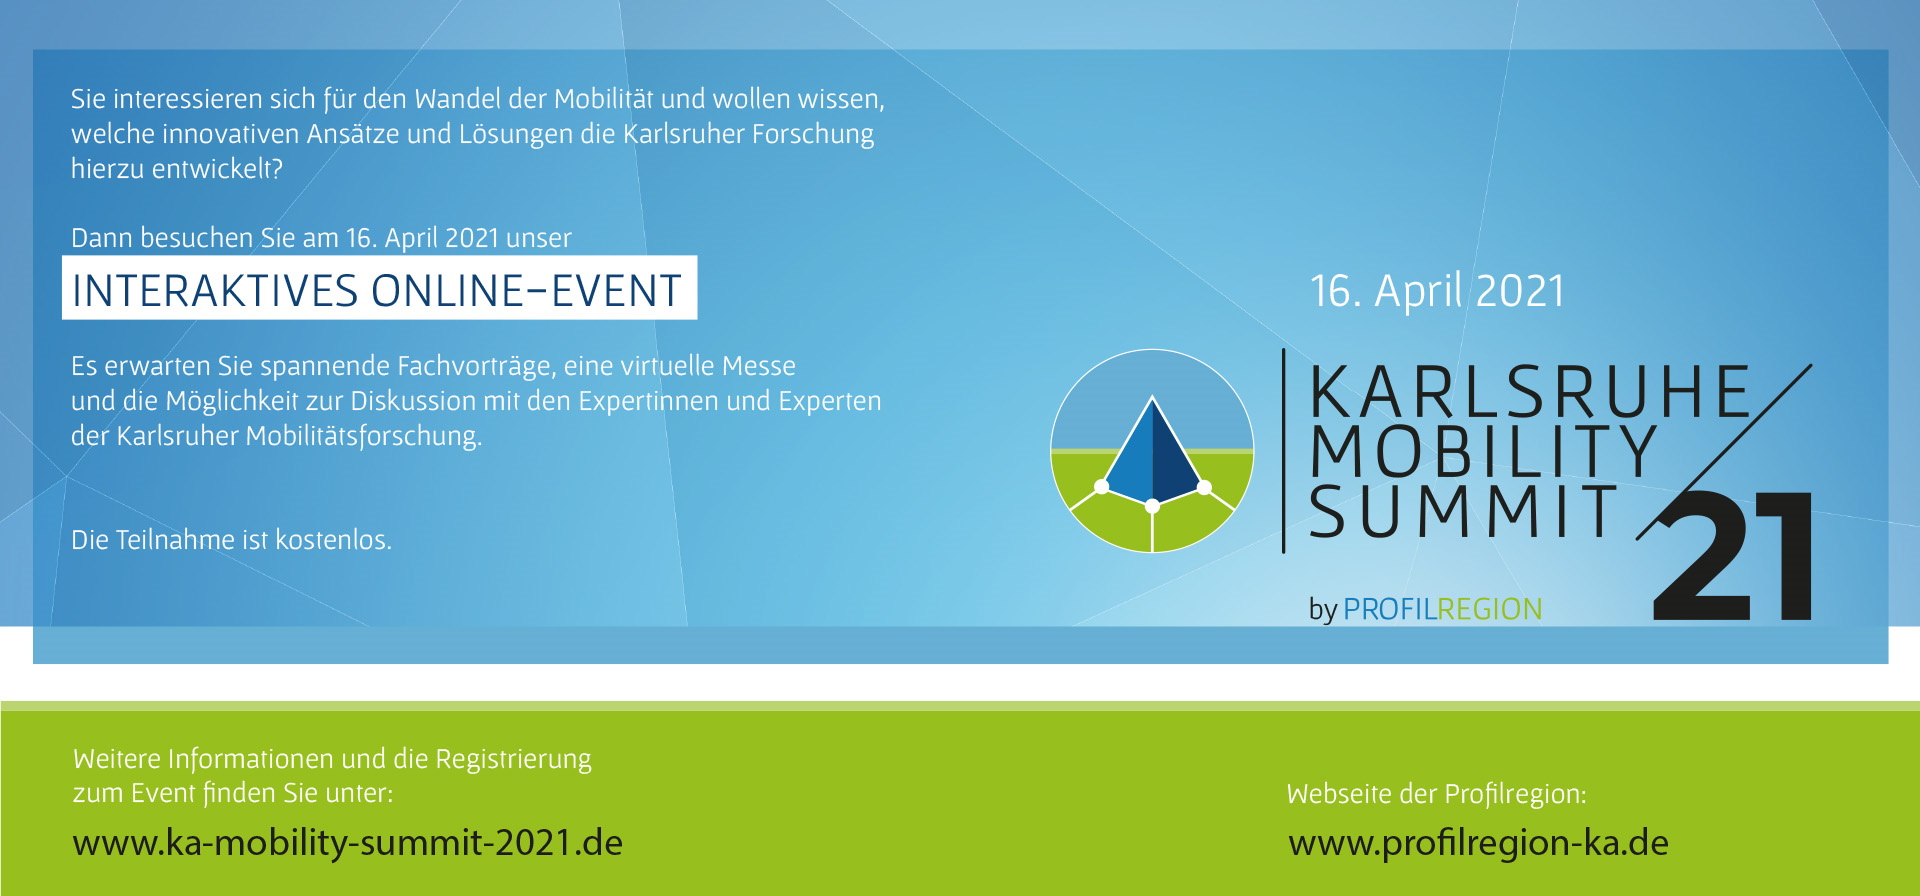 Karlsruhe Mobility Summit 2021 Einladung